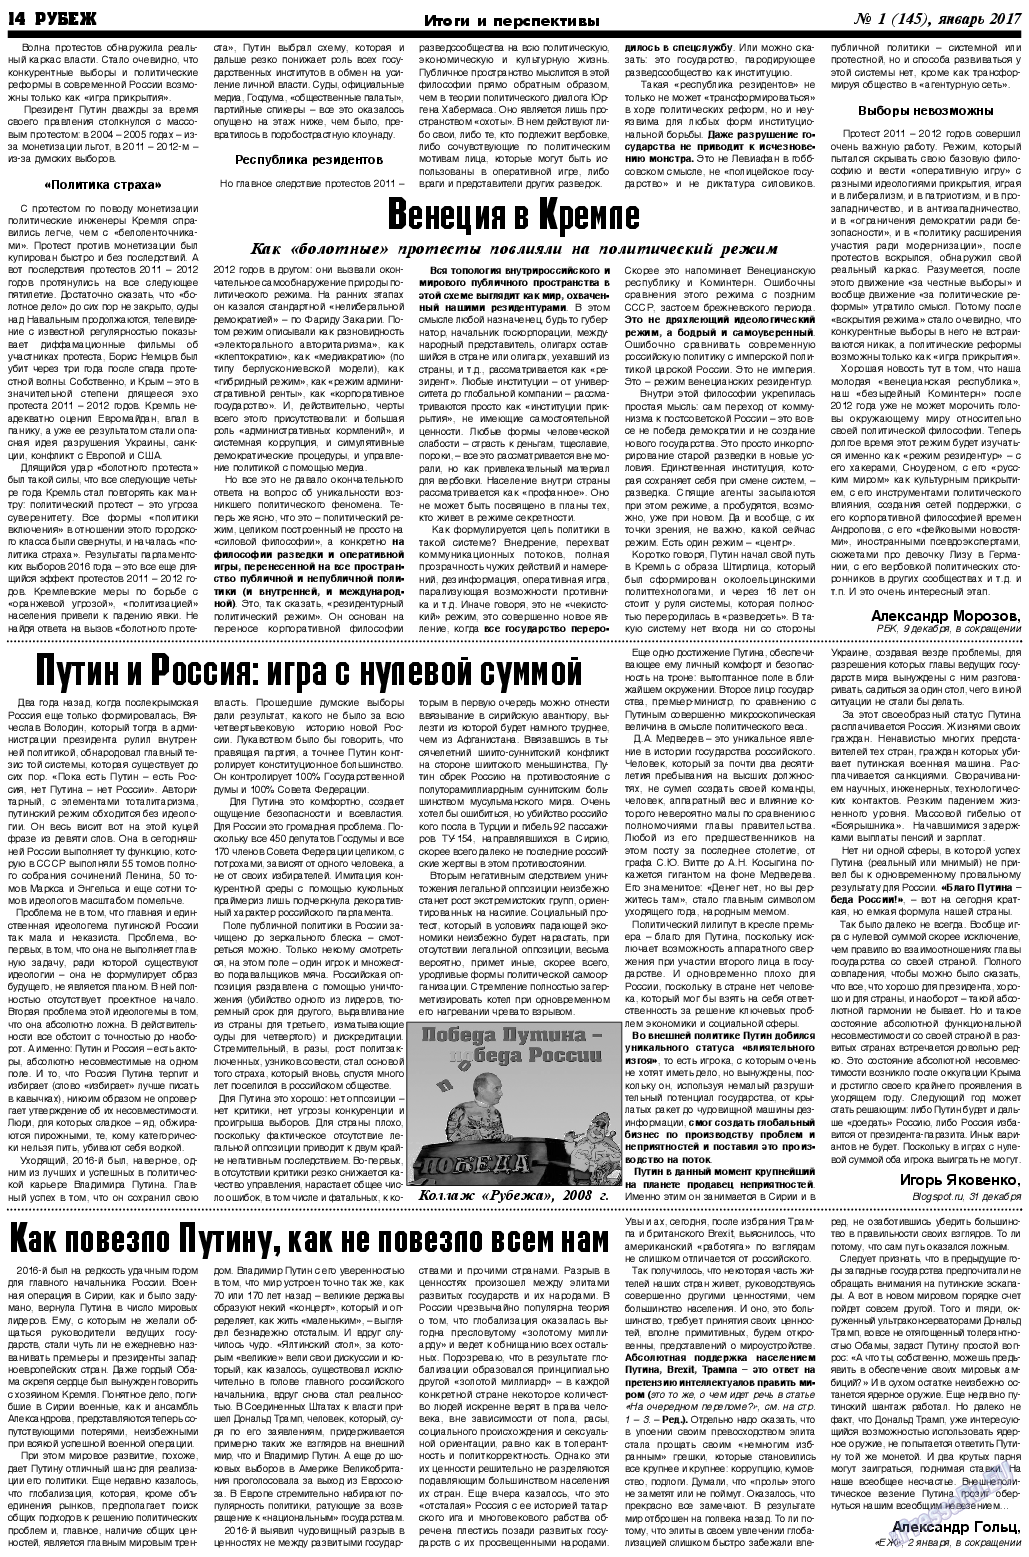 Рубеж, газета. 2017 №1 стр.14